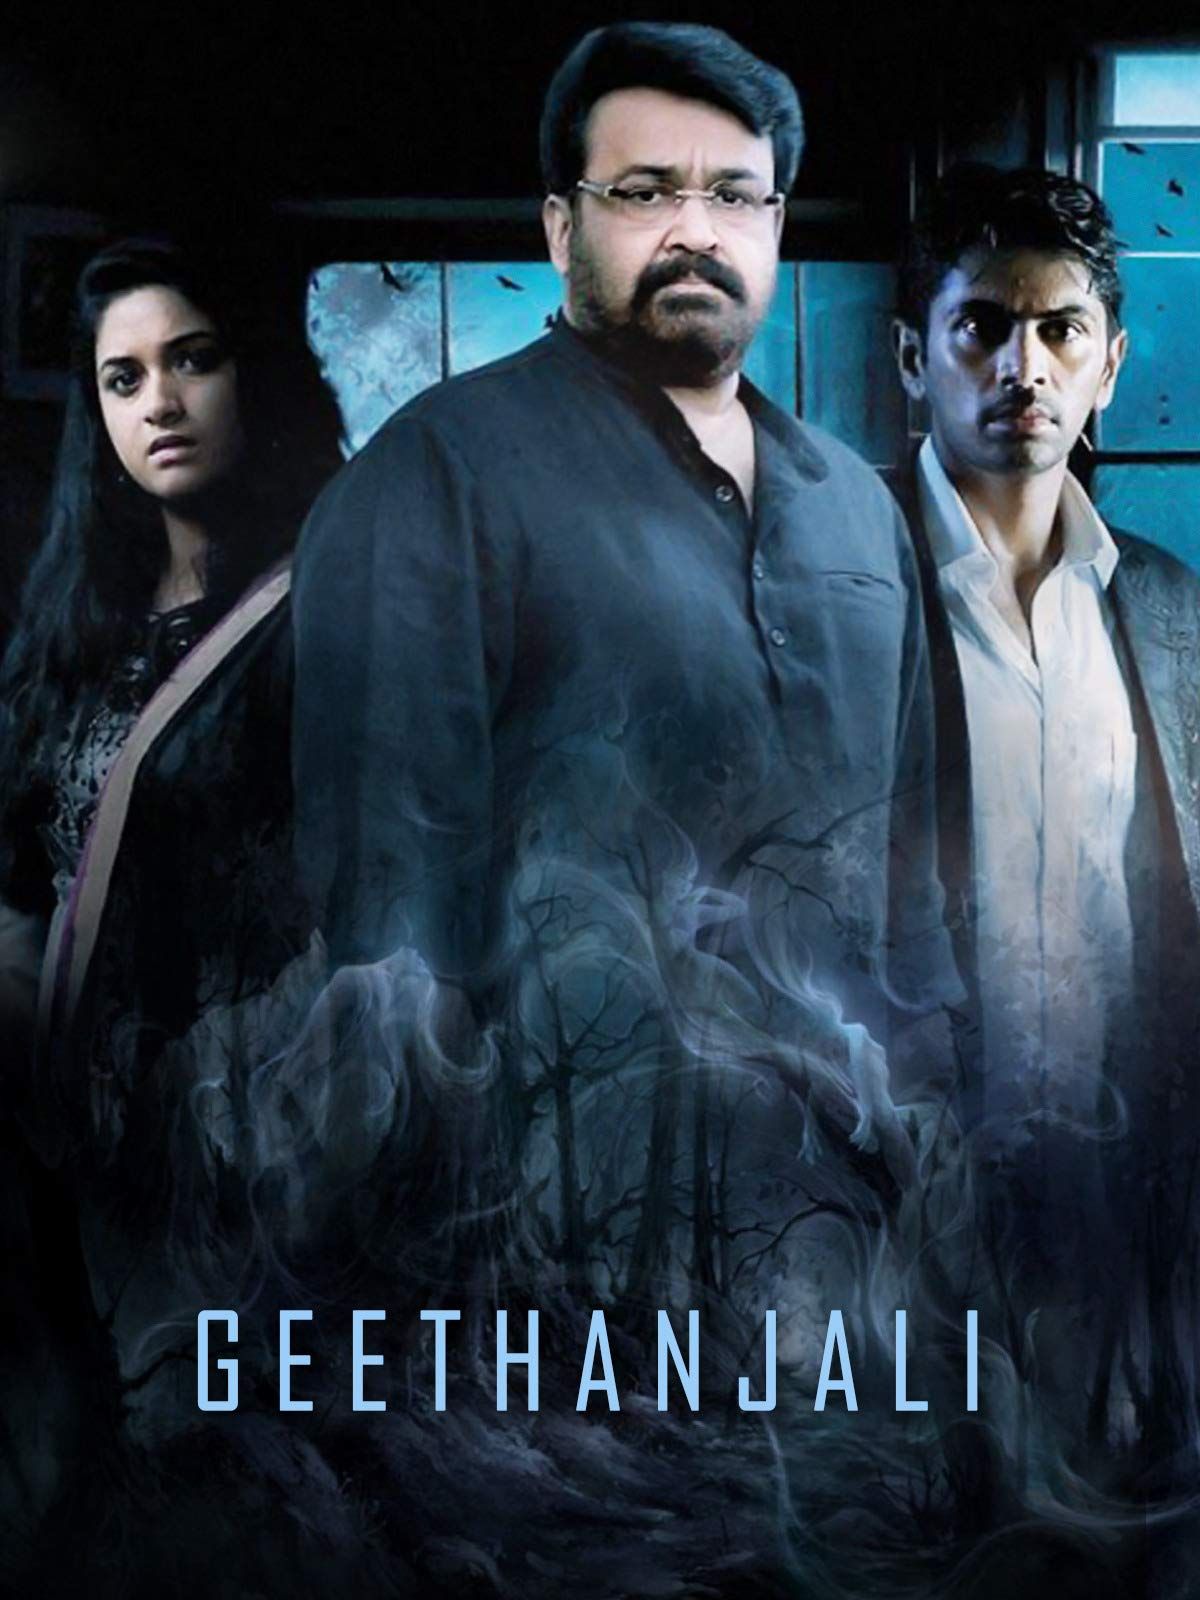 Geethanjali (2013) Hindi Dubbed HDRip download full movie